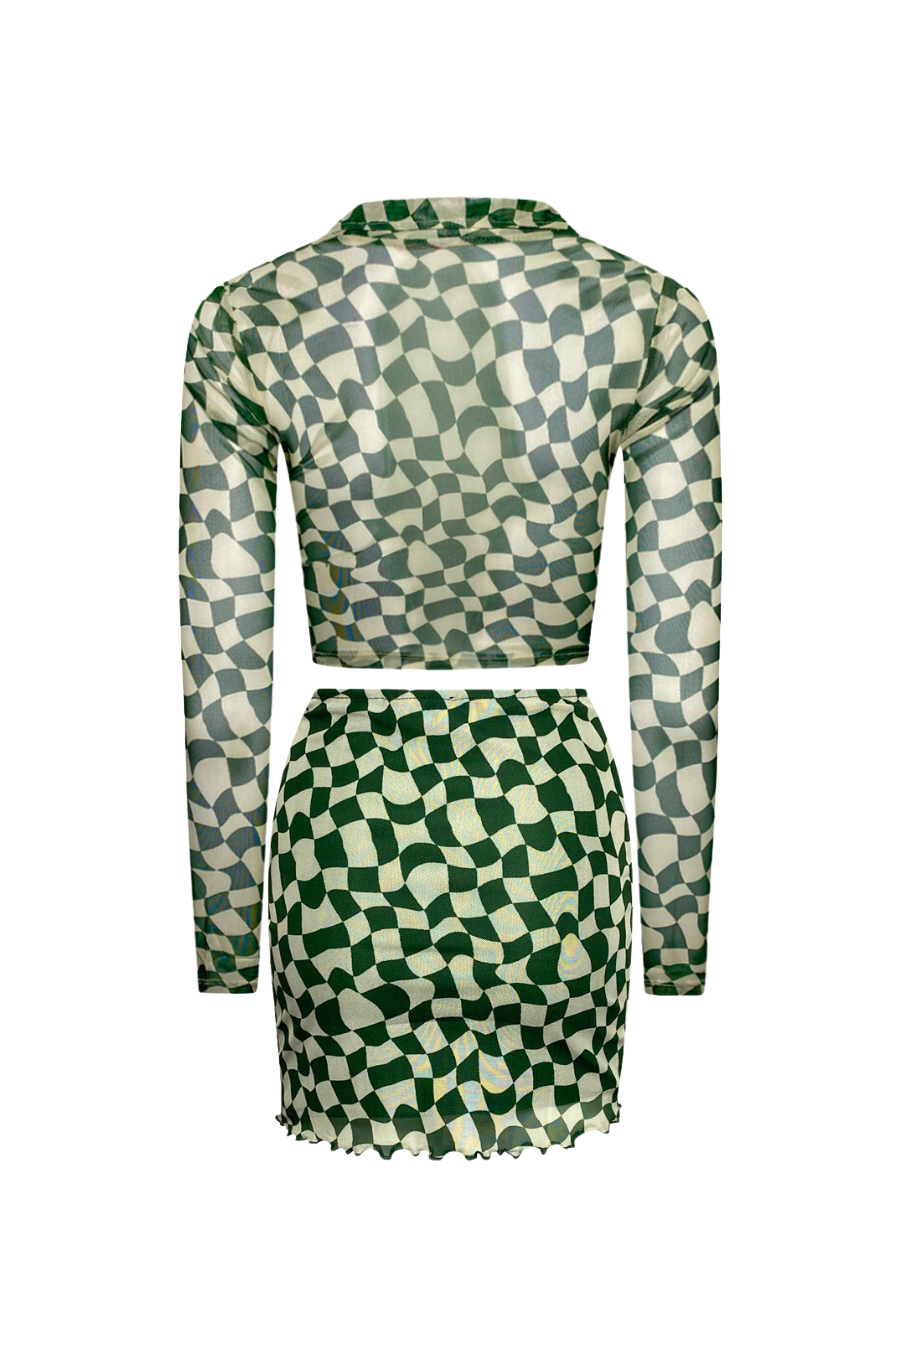 "WAVY CHECKERS" Forest Green & Cream Print Mesh High-Waisted Short Skirt